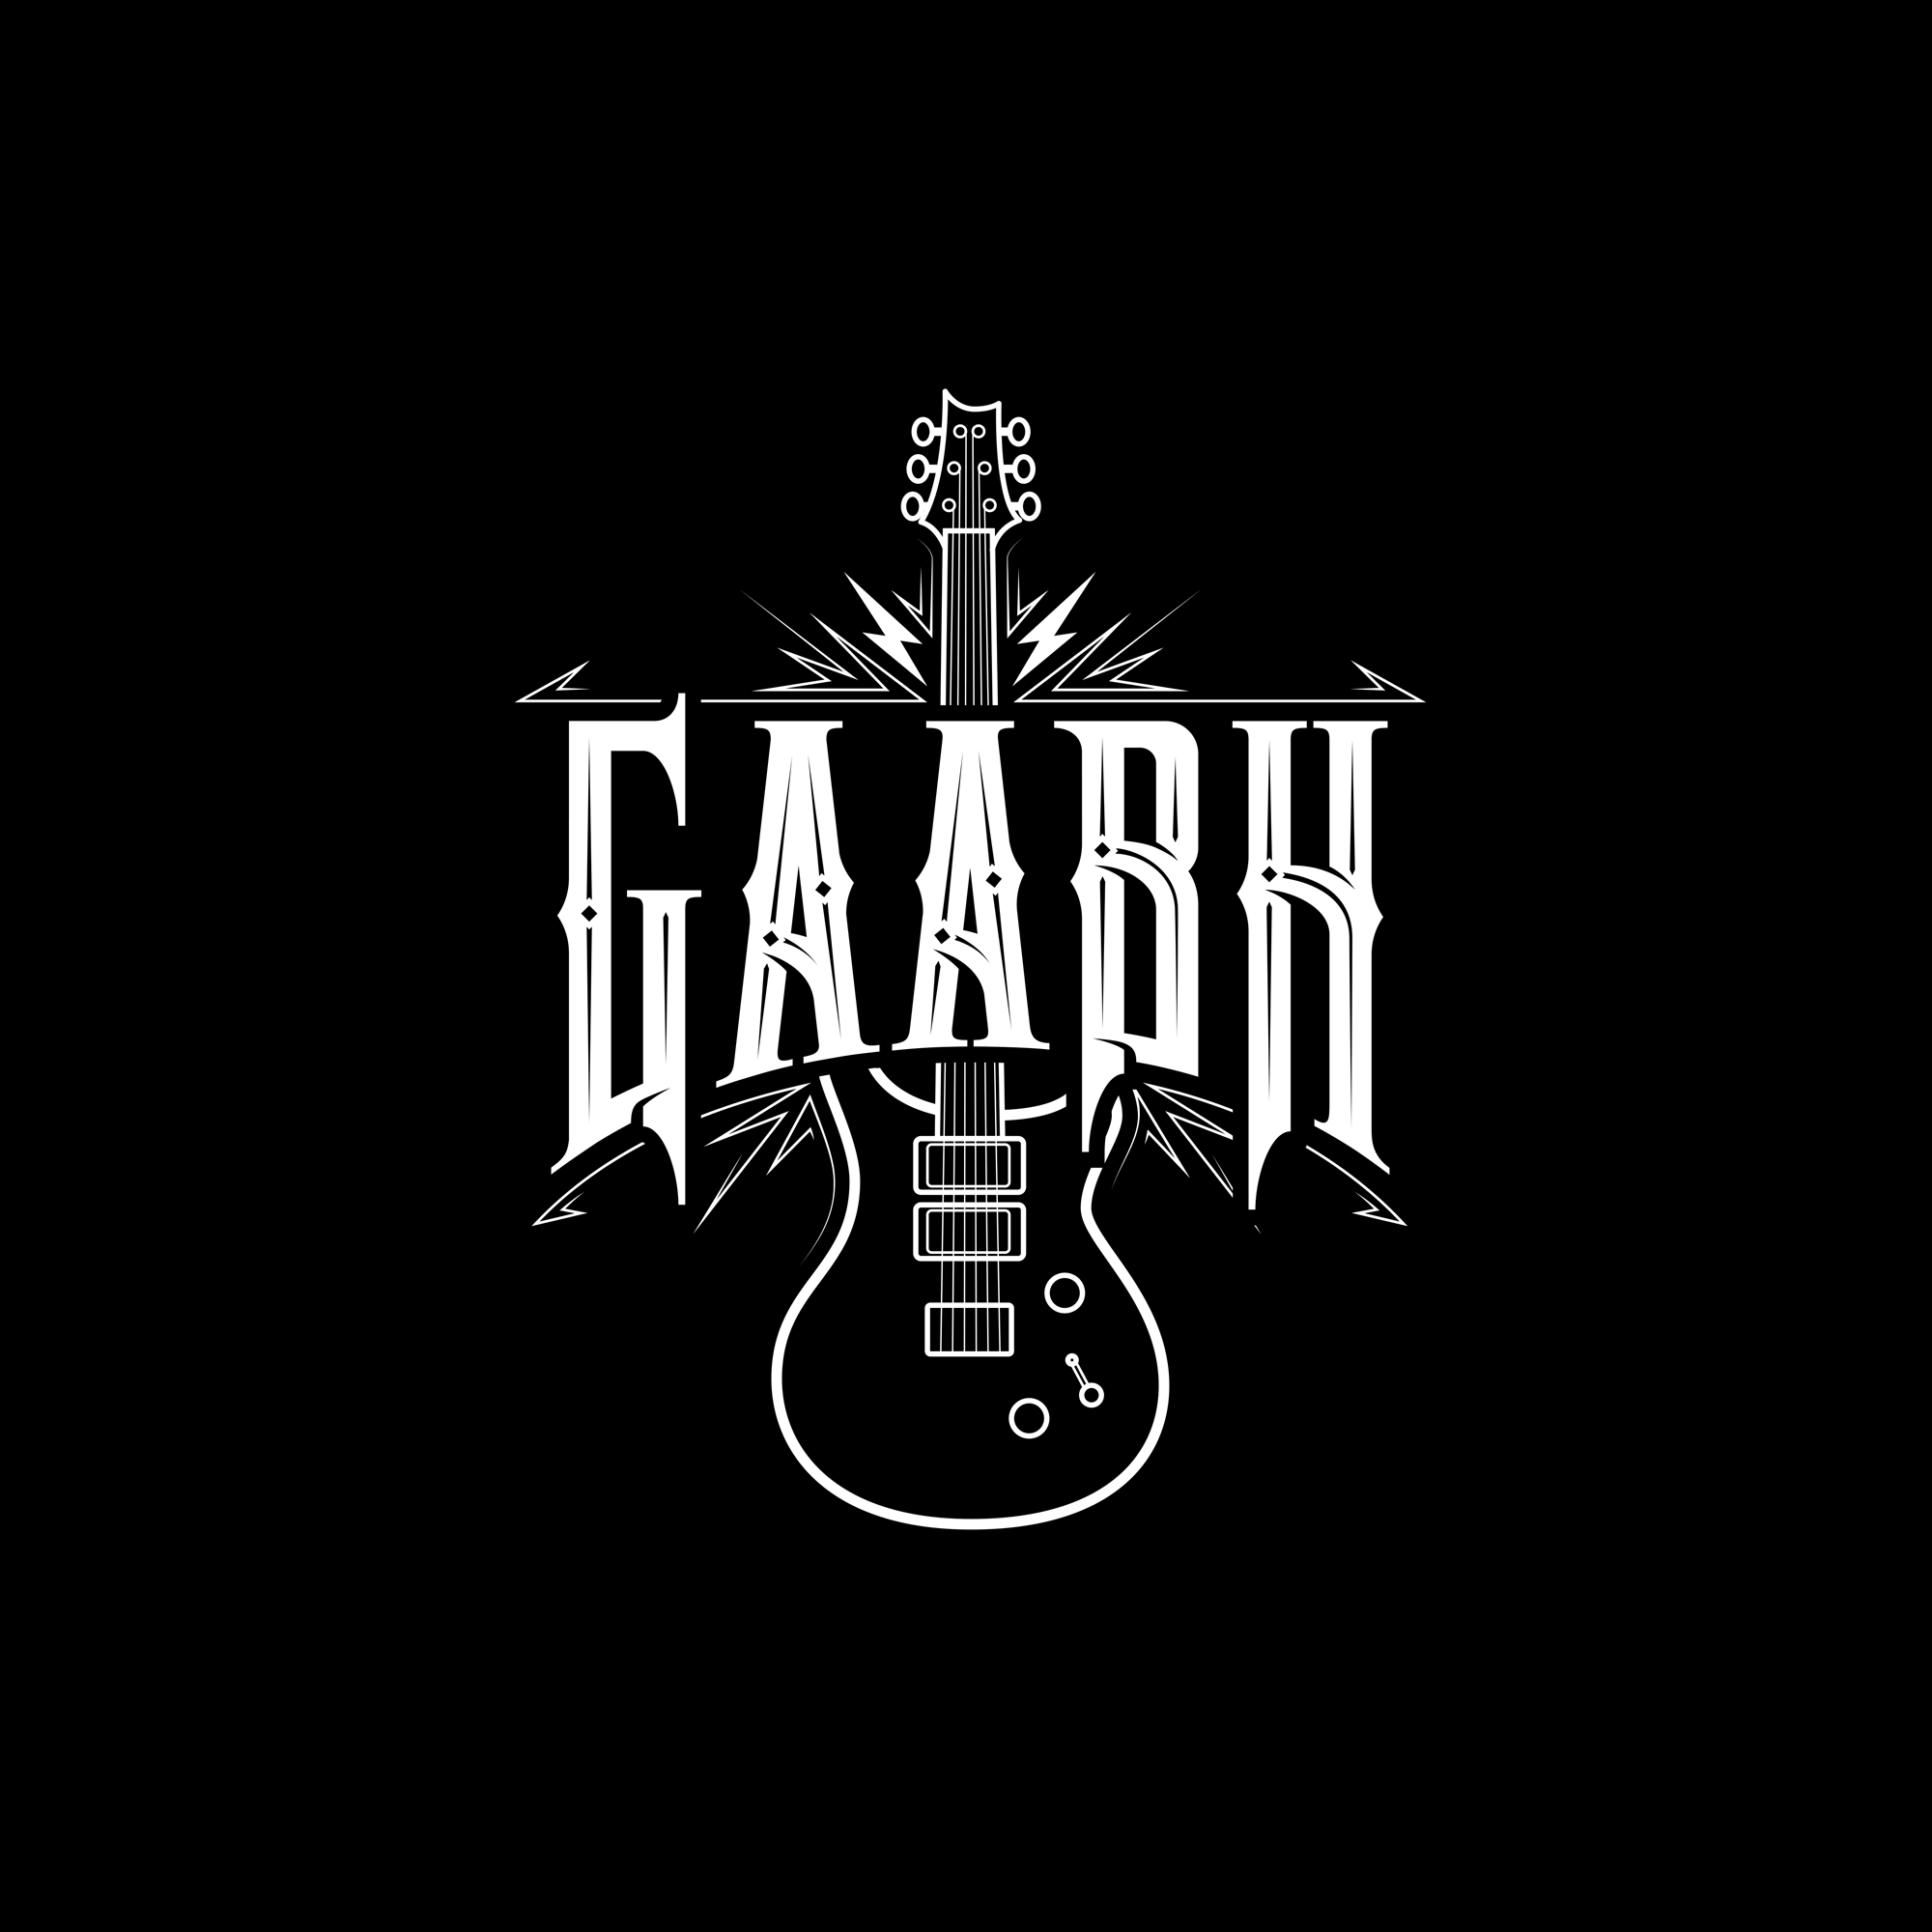 Gaabh logo final